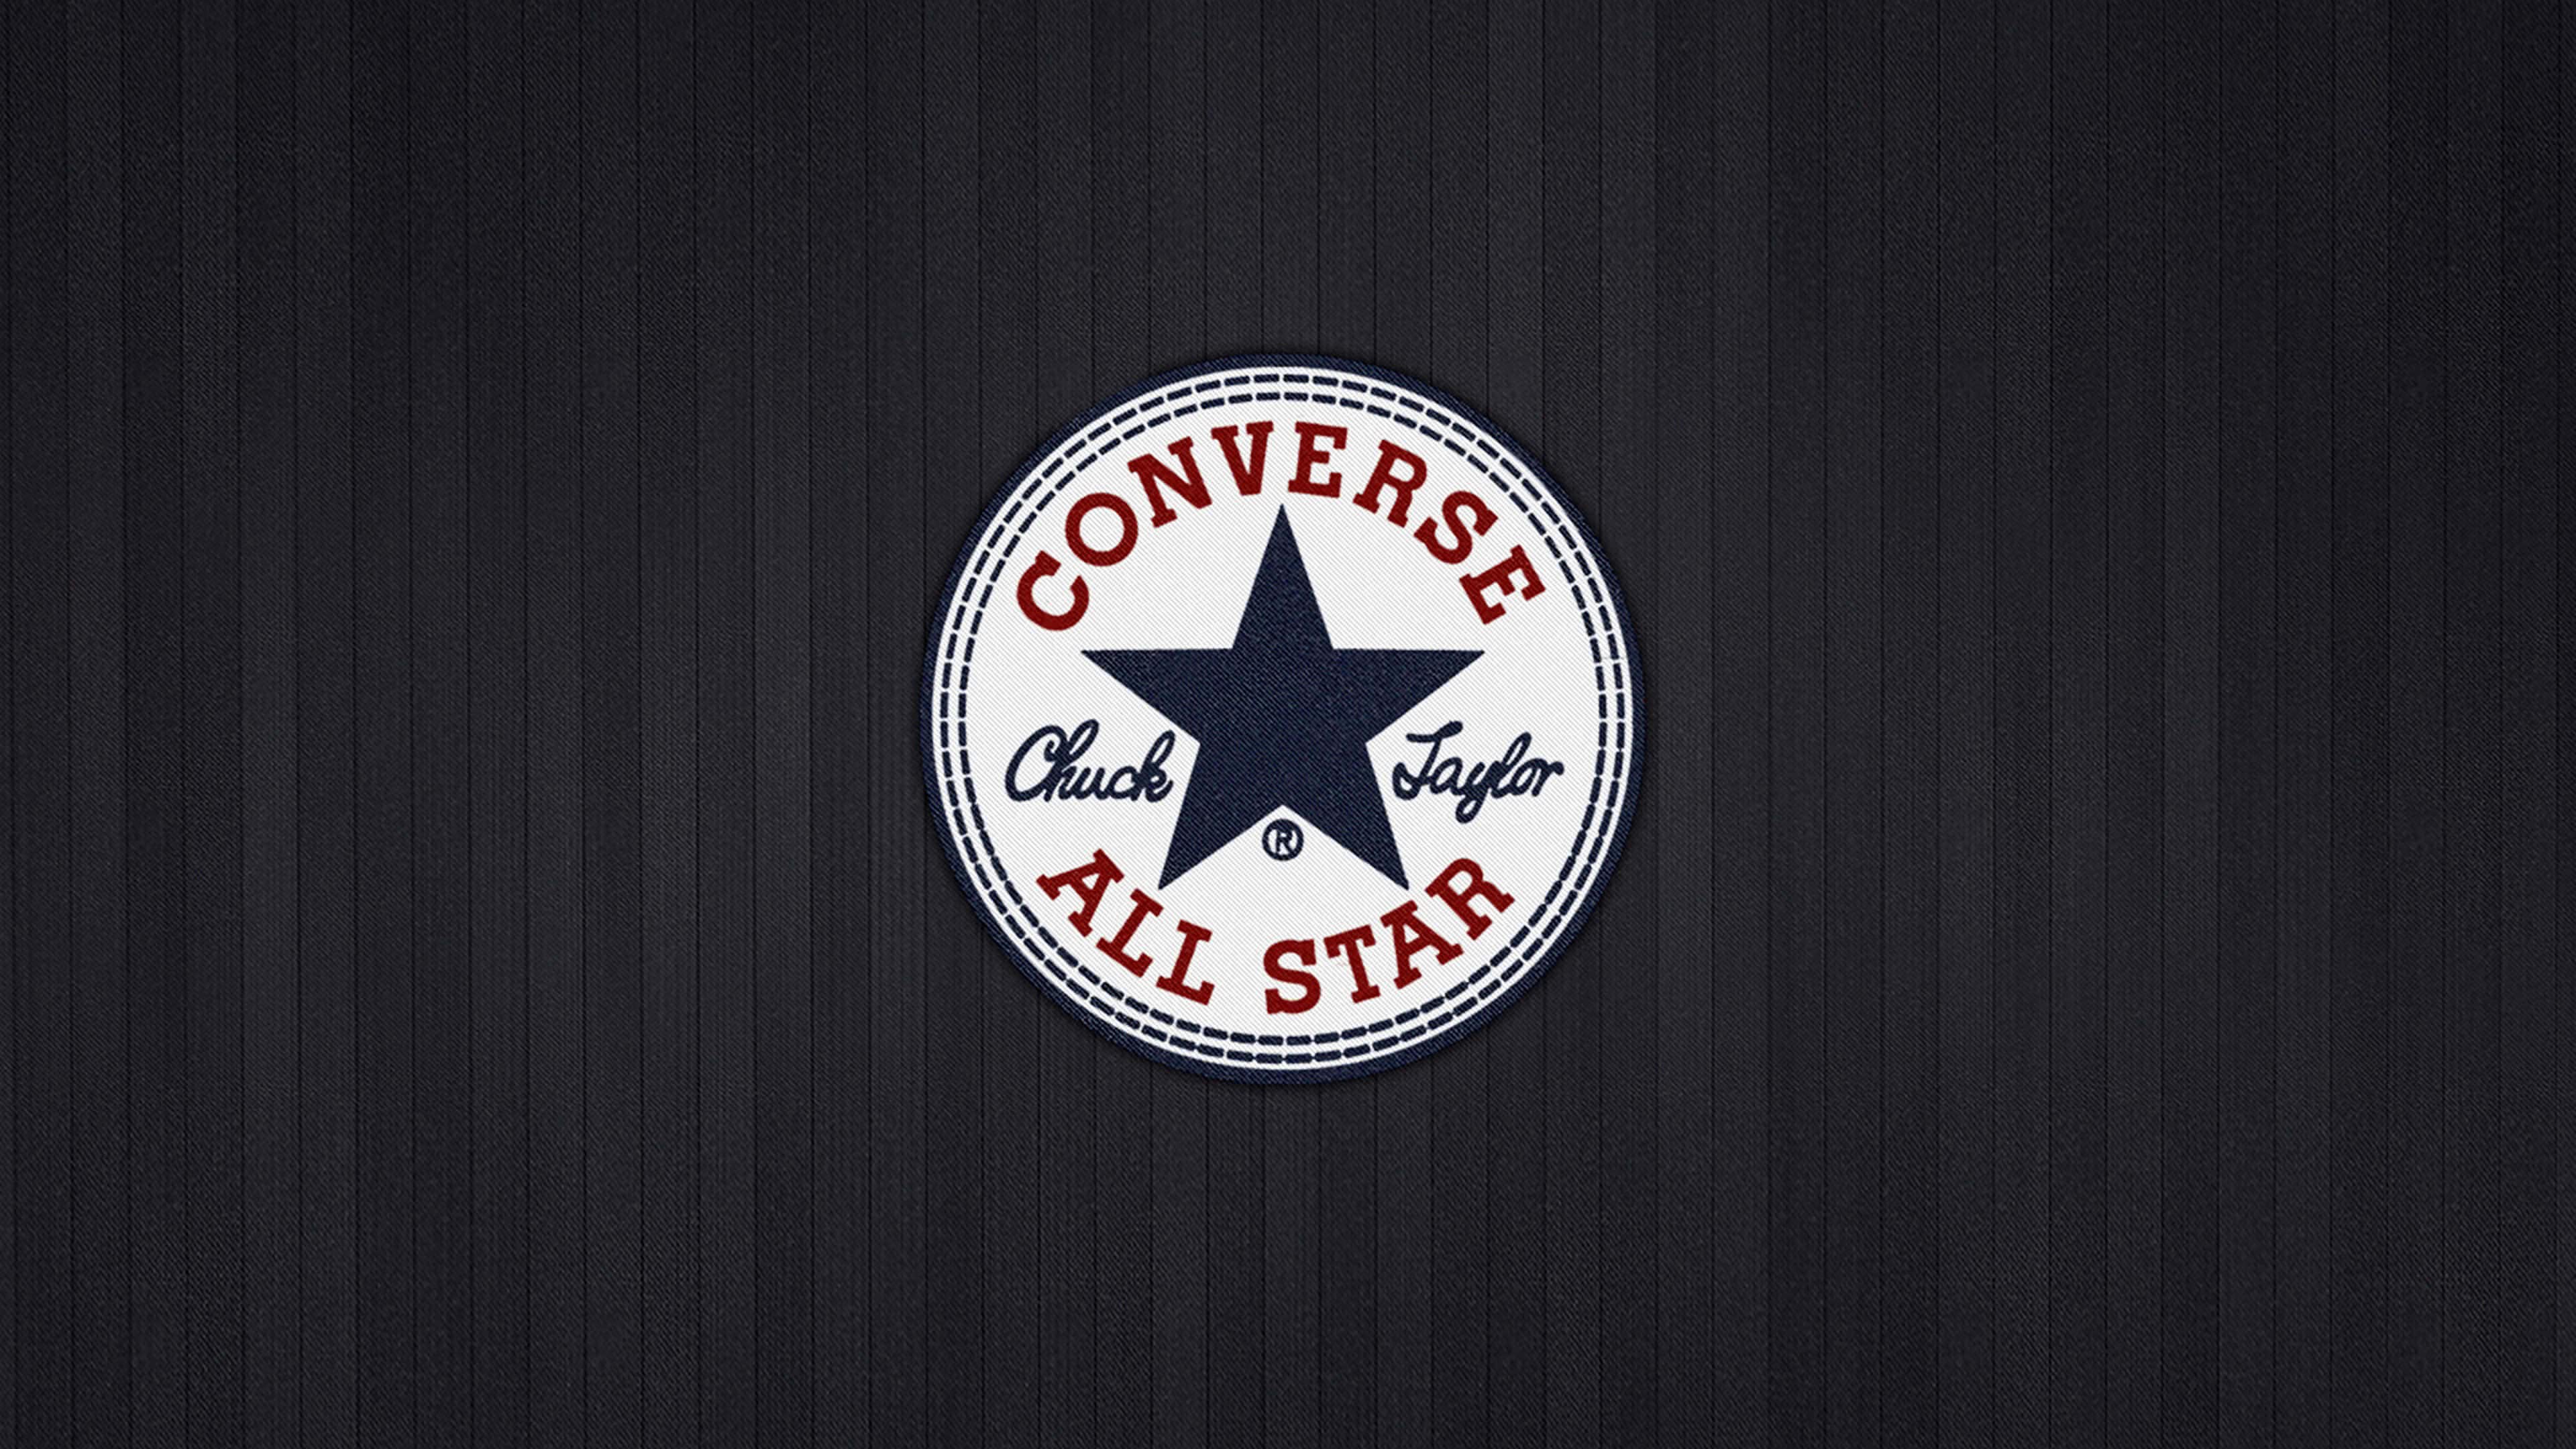 Converse All Star Logo UHD 4K Wallpaper - Pixelz.cc